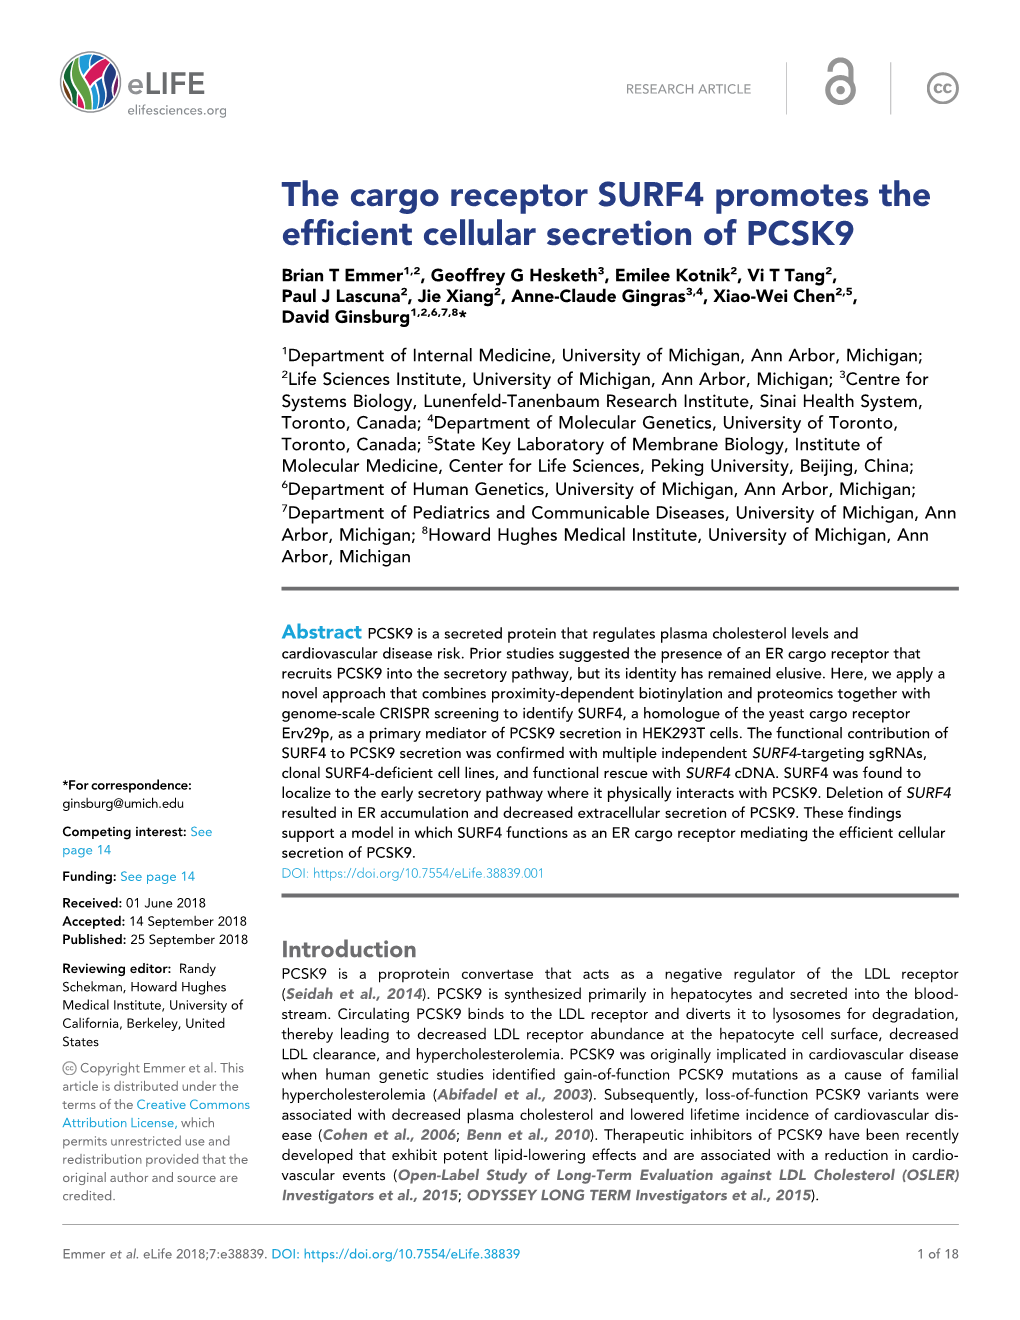 The Cargo Receptor SURF4 Promotes the Efficient Cellular Secretion Of